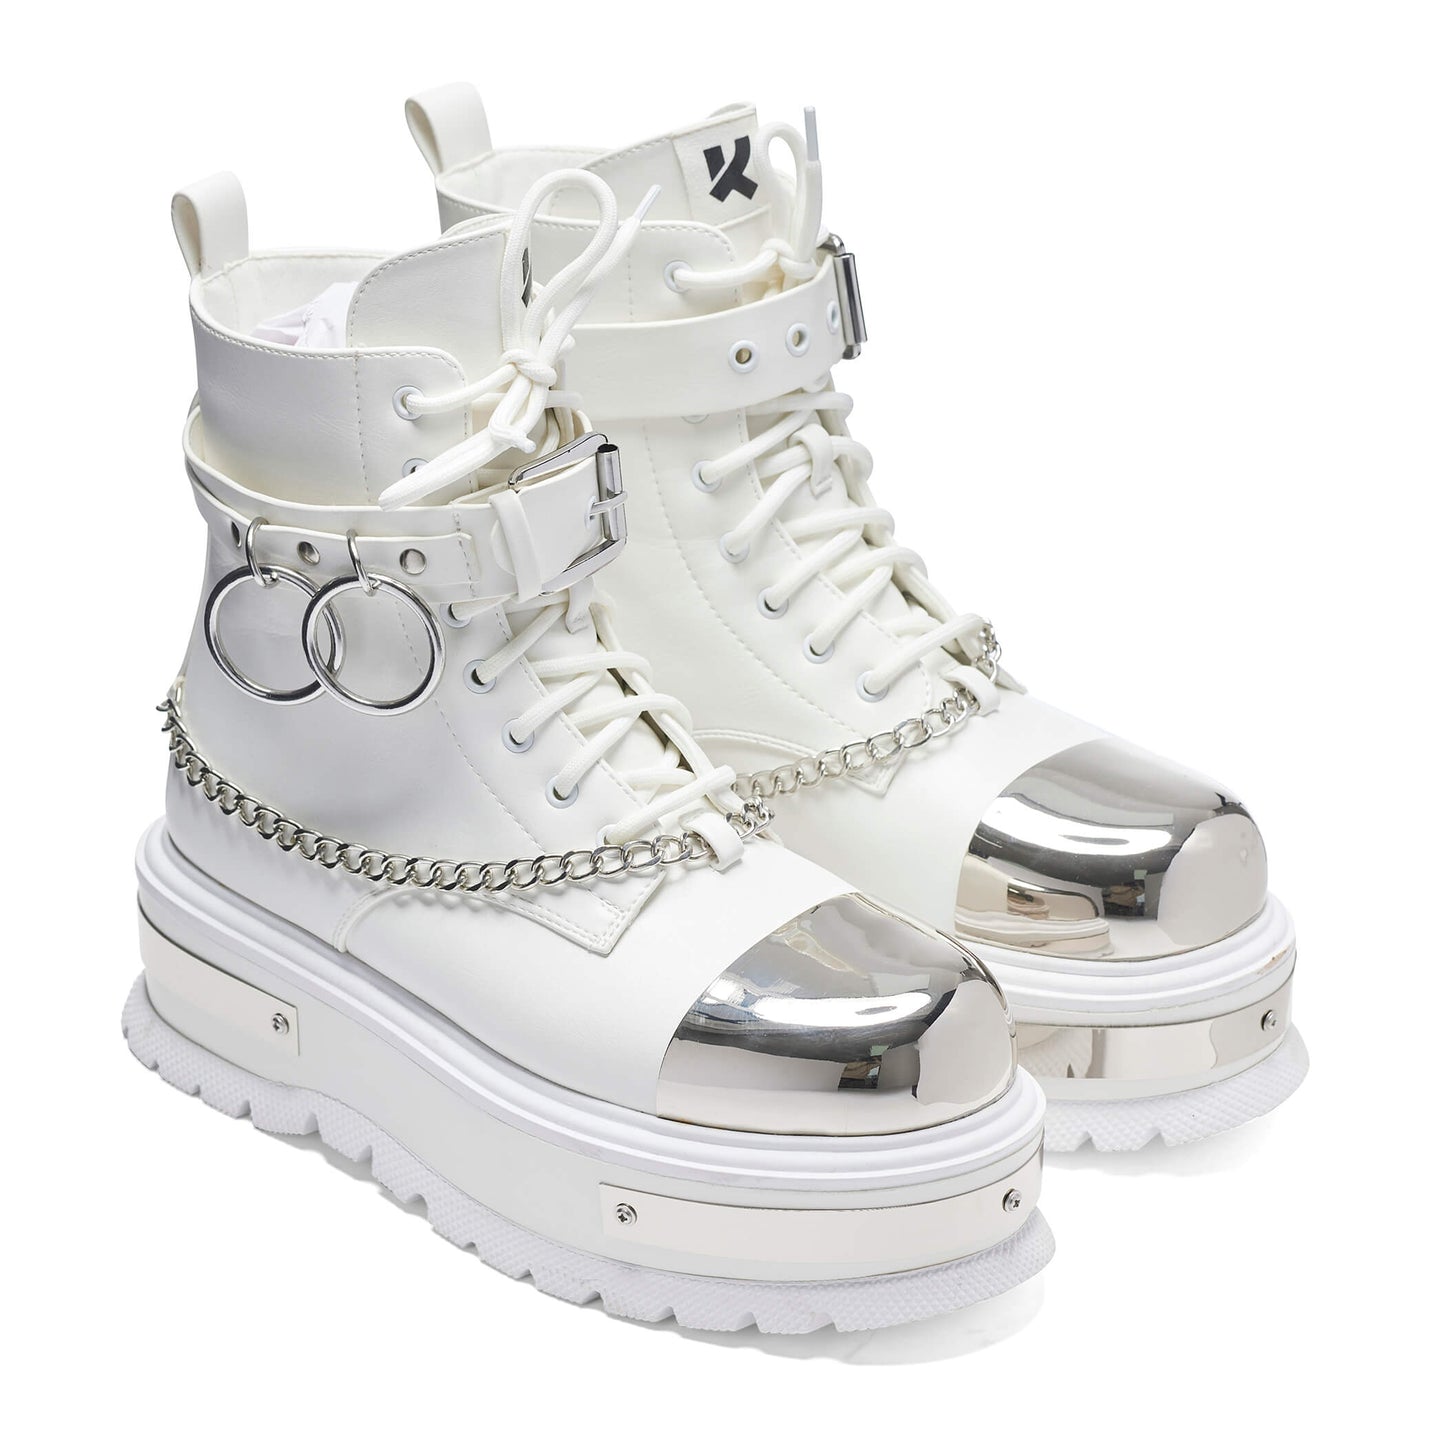 Borin Hardware Platform Boots - White - KOI Footwear - Three-Quarters View